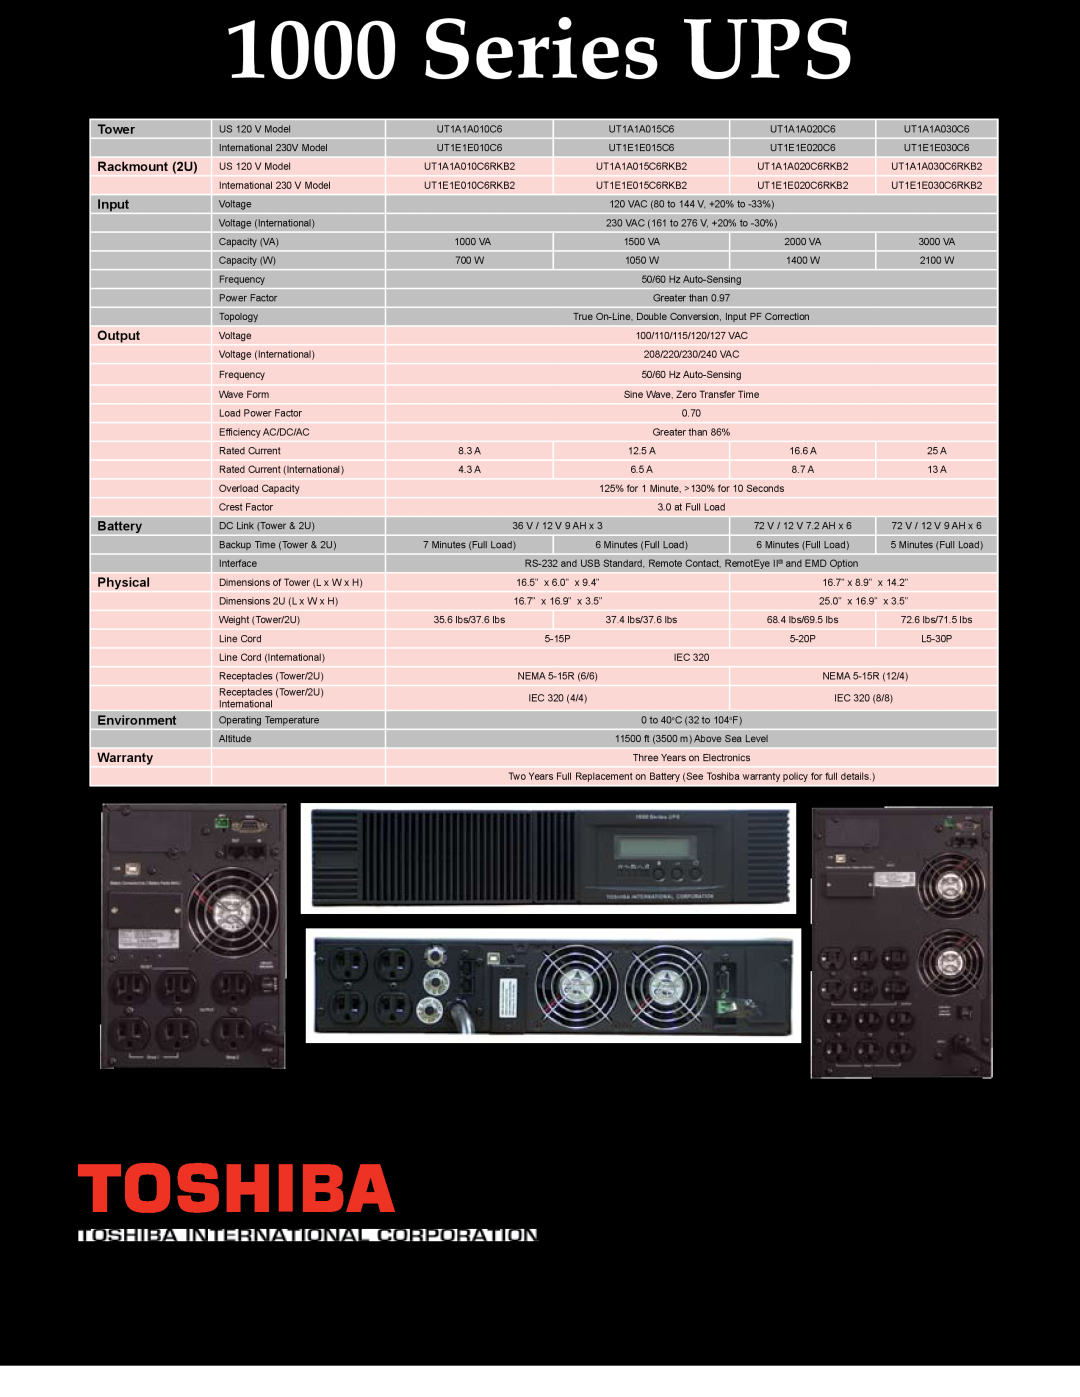 Toshiba 1000 SEREIS Series UPS, Available Through, Ups Adjustable Speed Drives, Motors, Controls Instrumentation Plc 